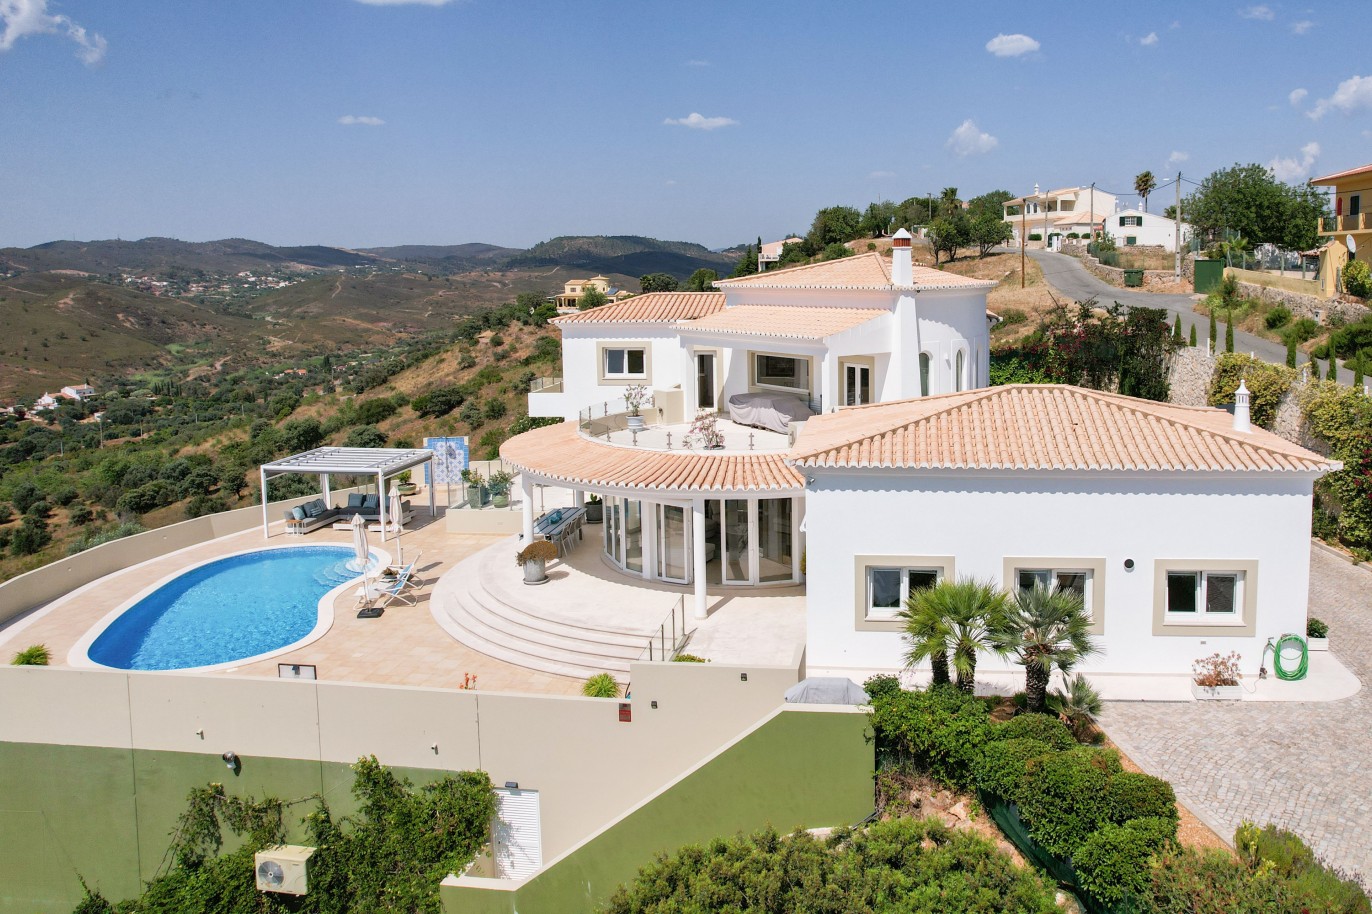 4 Bedroom Luxury Villa with pool for sale in Silves, Algarve_227367